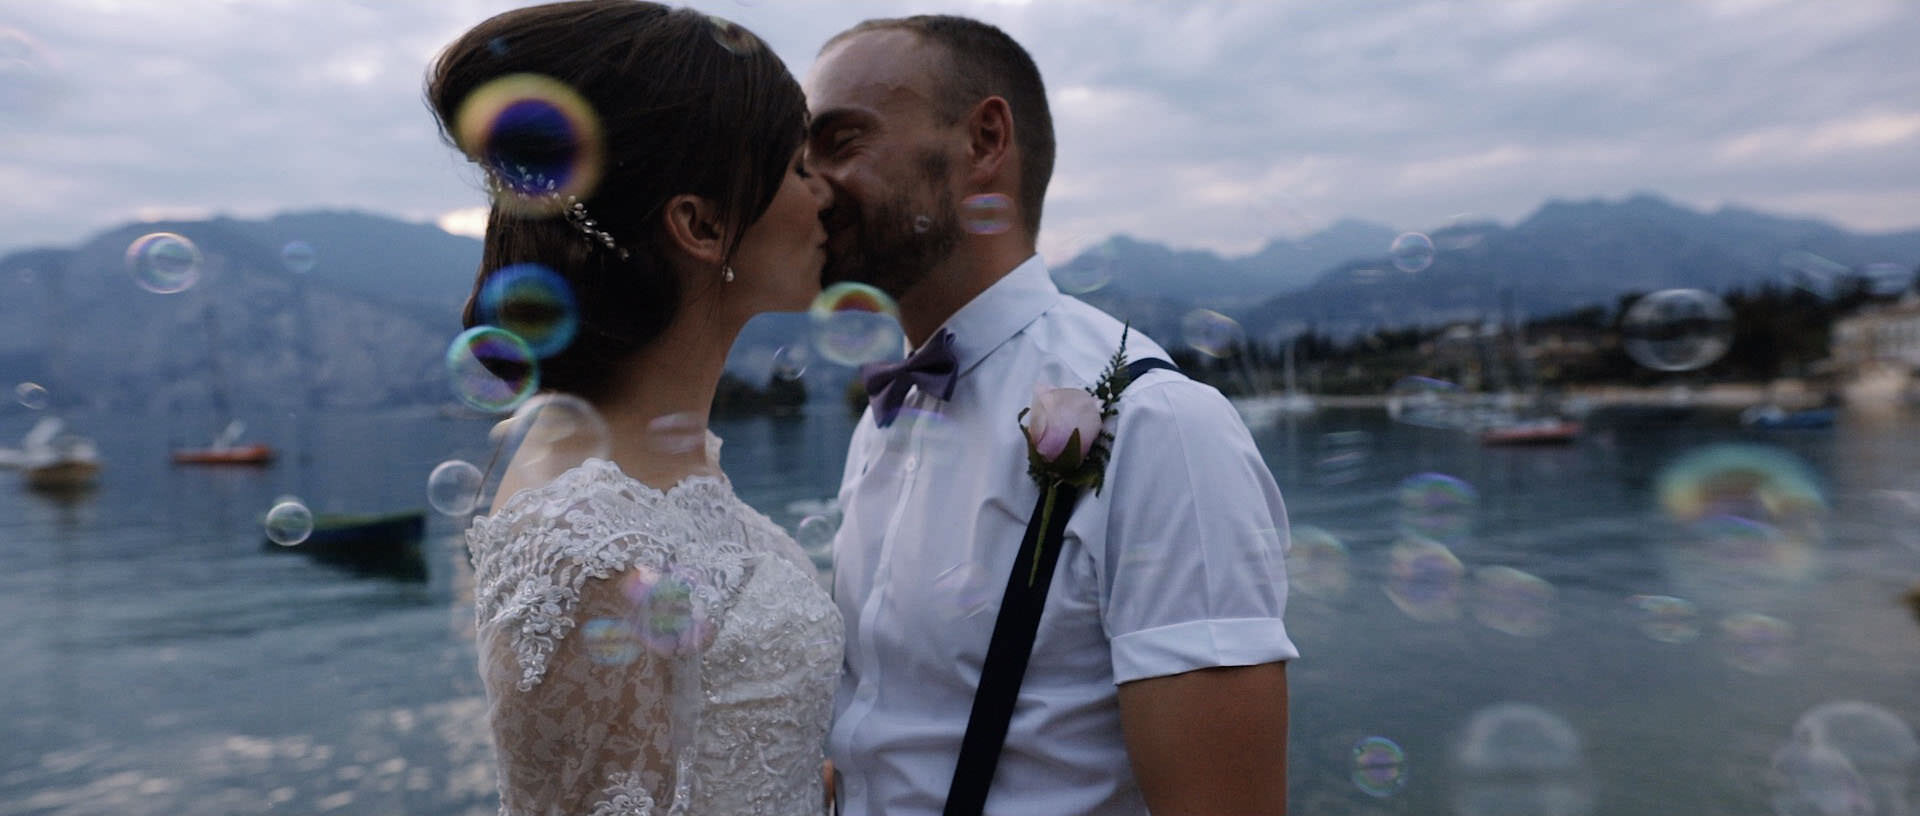 Lisa & Josh's Perfect Malcesine Wedding at Lake Garda 1.jpg